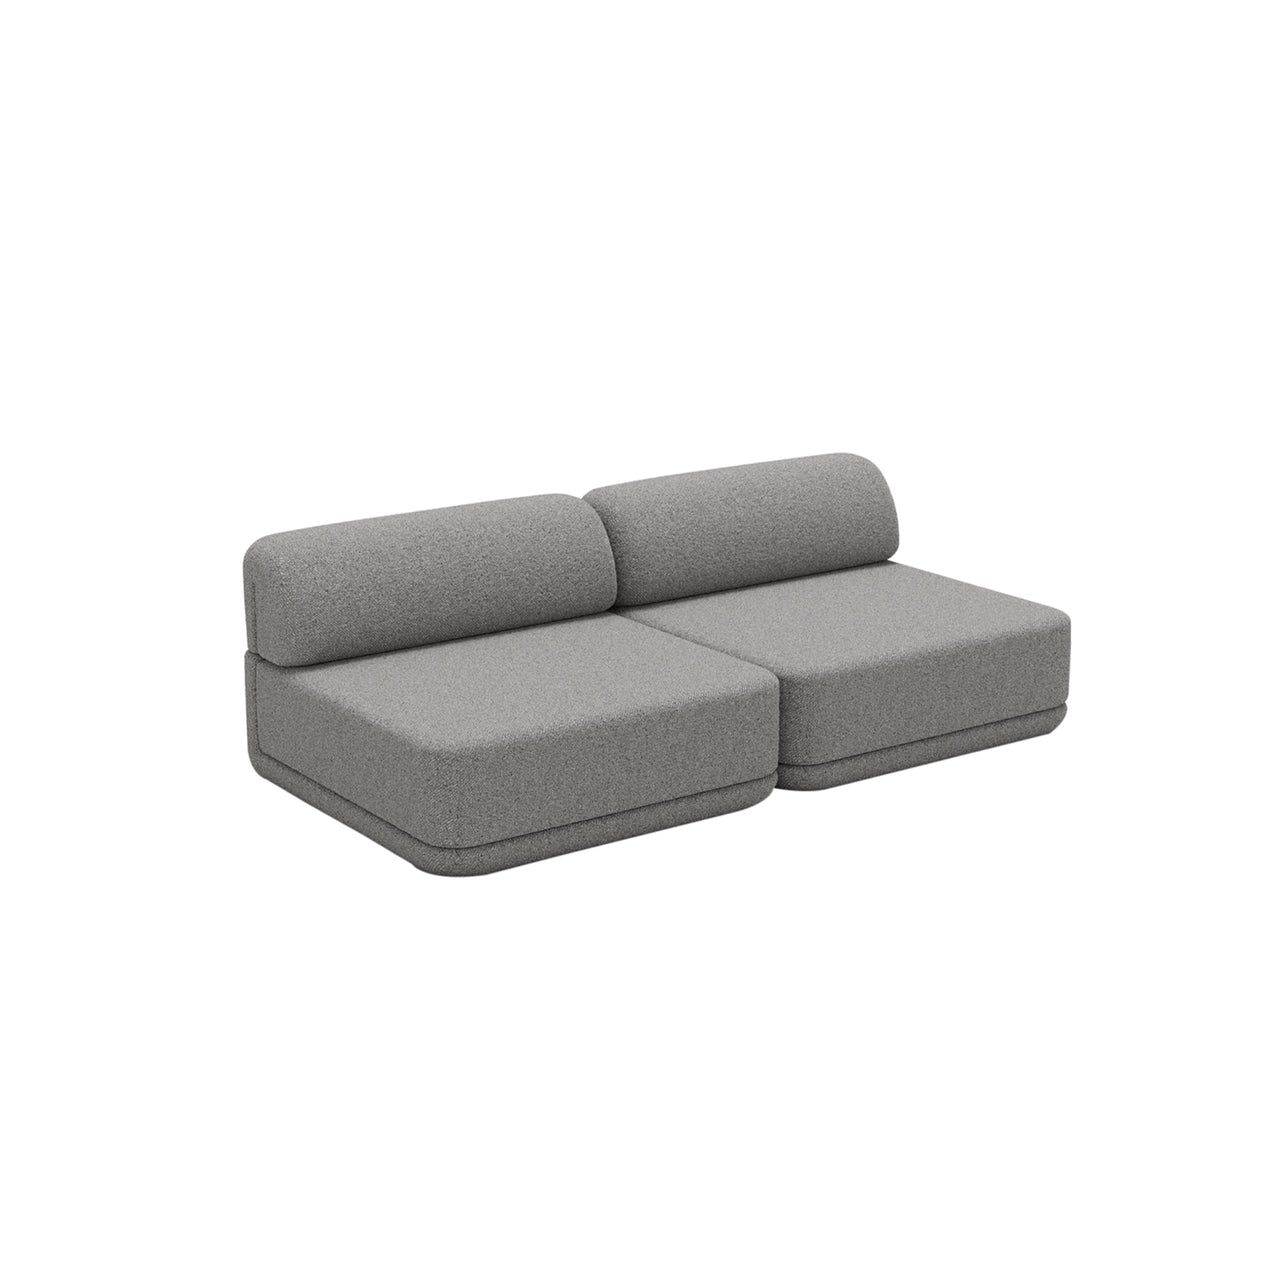 Cube Modular Sofa: Configuration 1